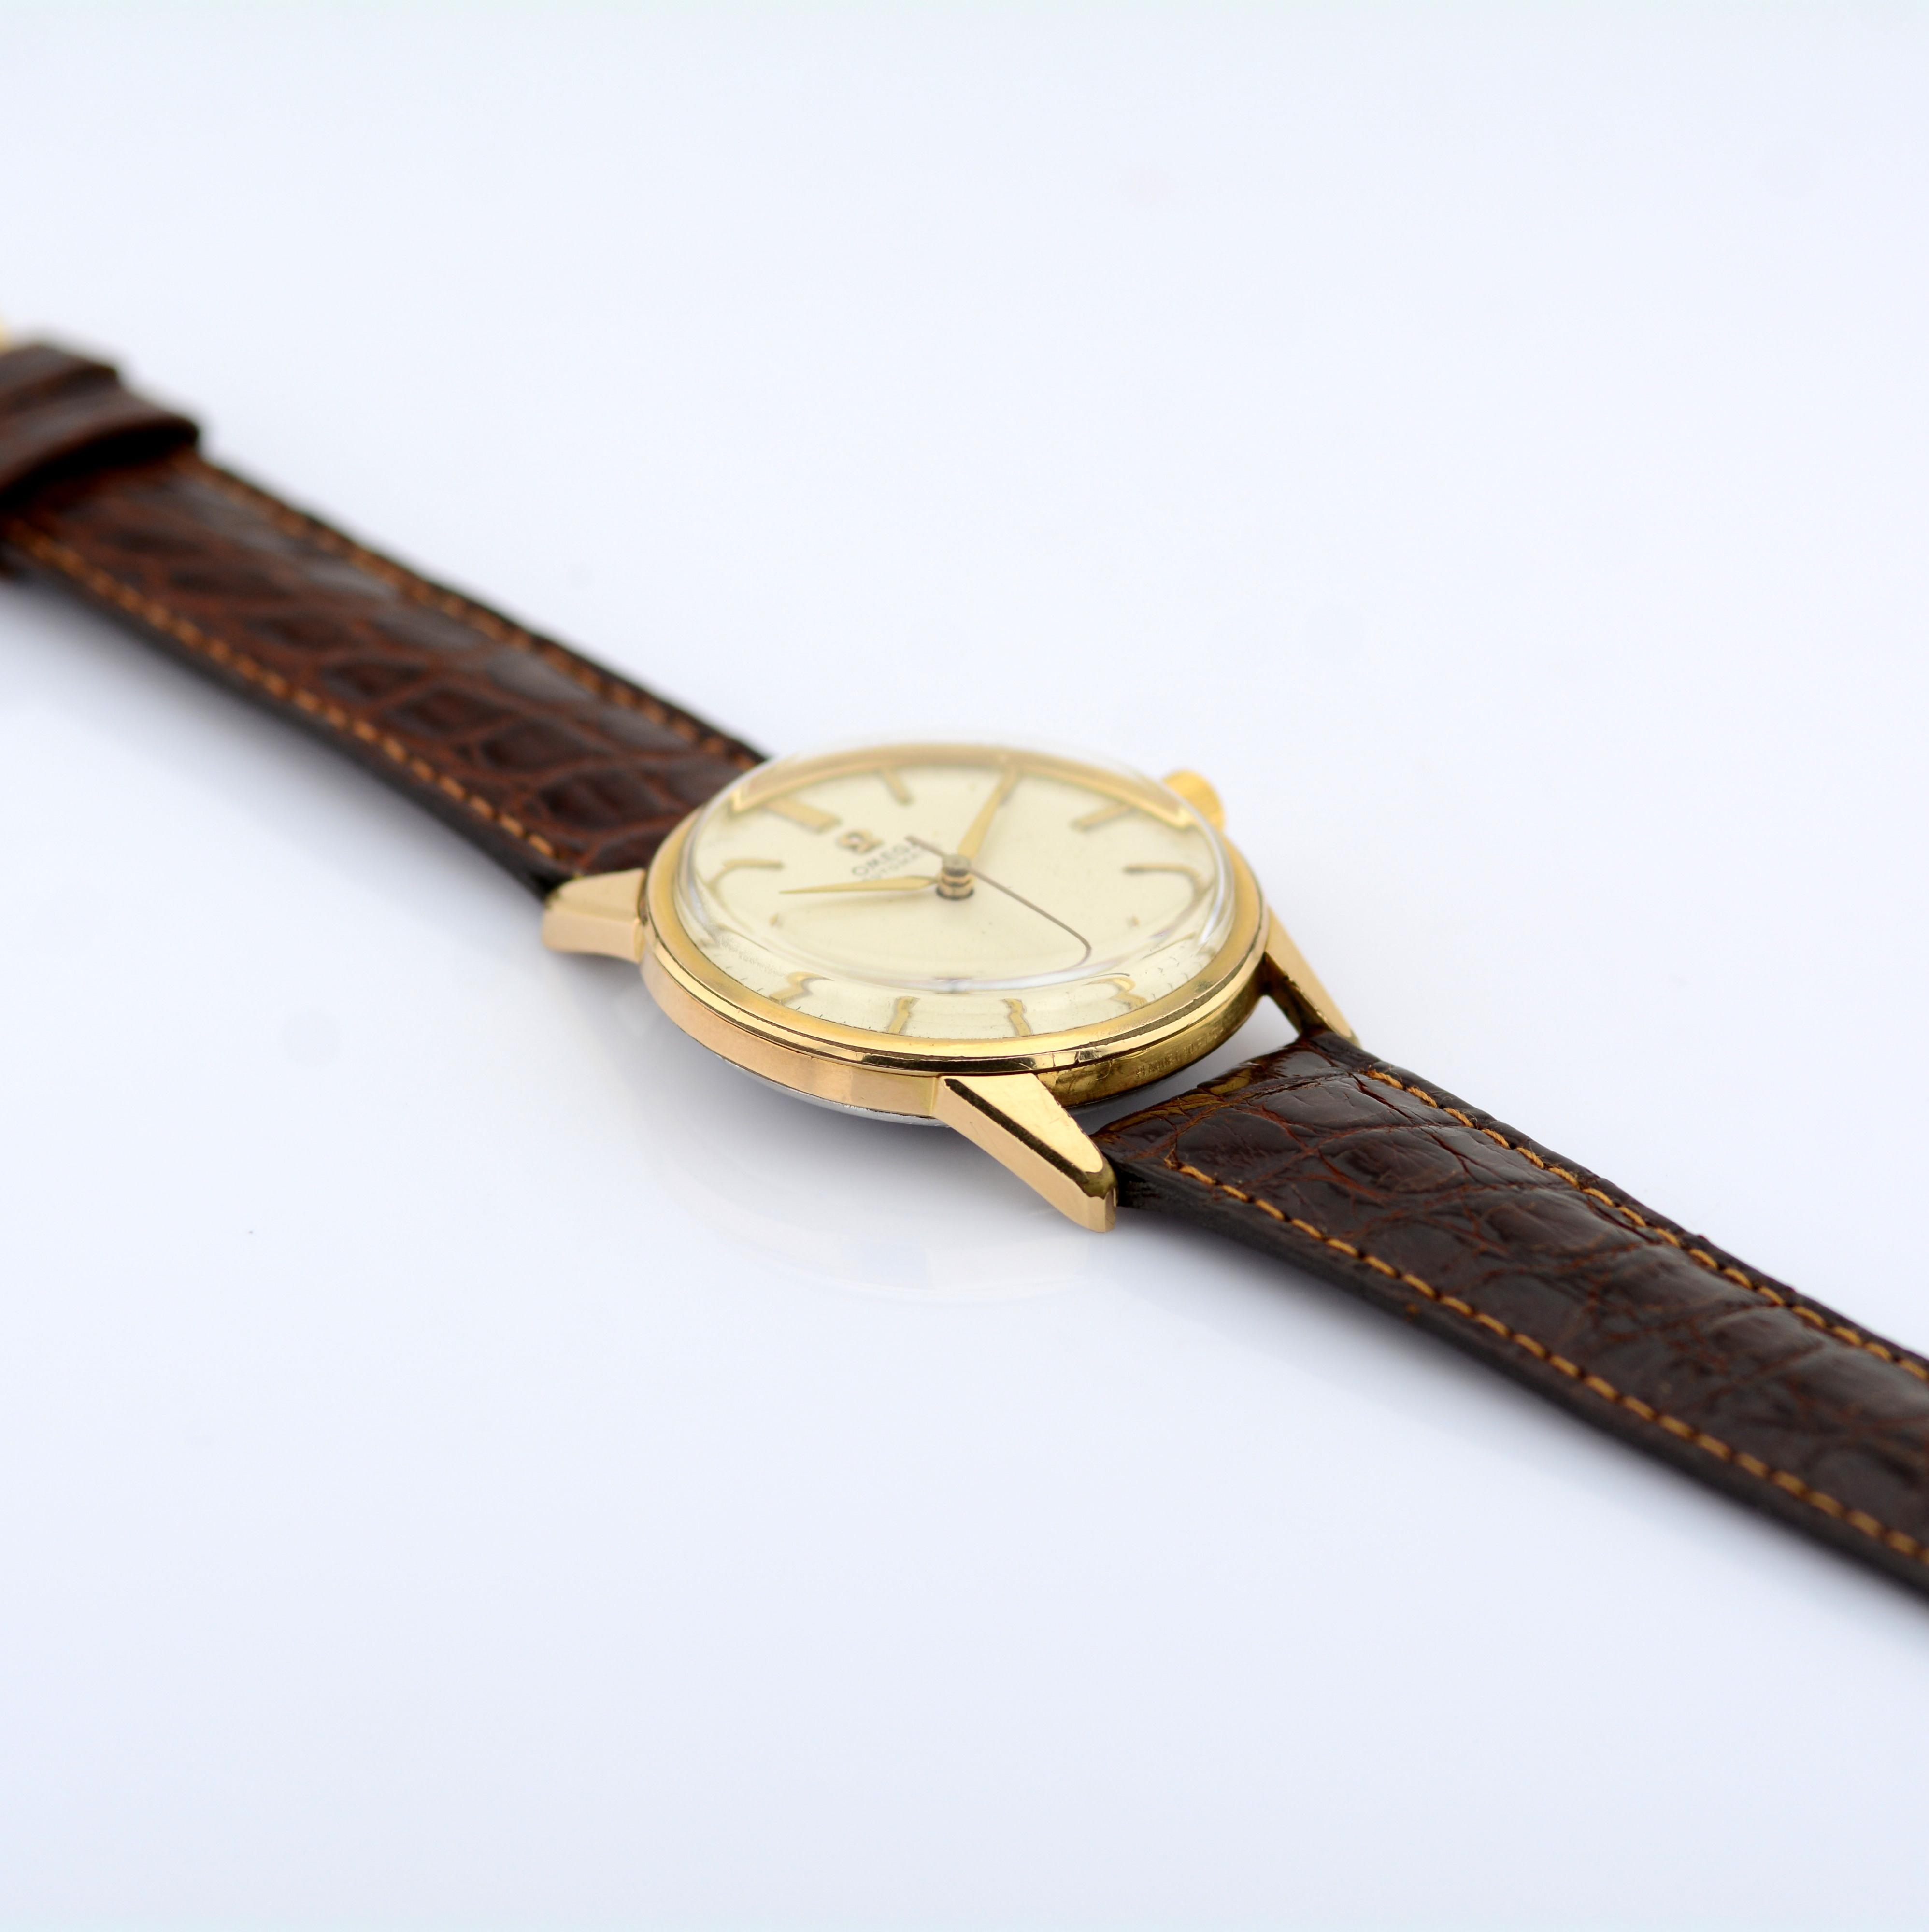 Omega / Vintage Automatic - Gentlmen's Gold/Steel Wrist Watch - Image 5 of 8